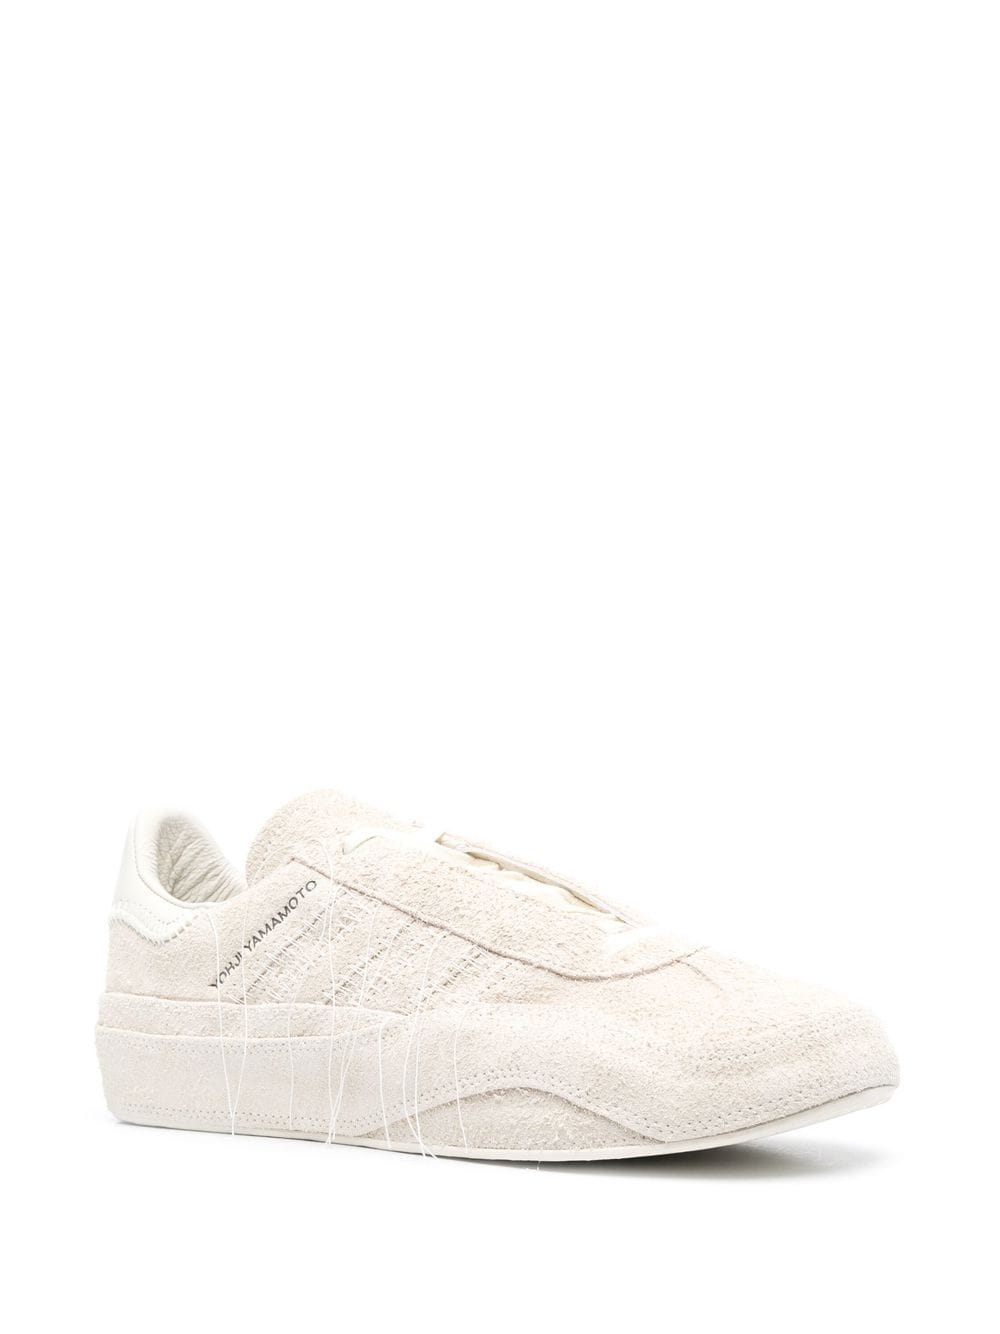 Y-3 Sneakers White